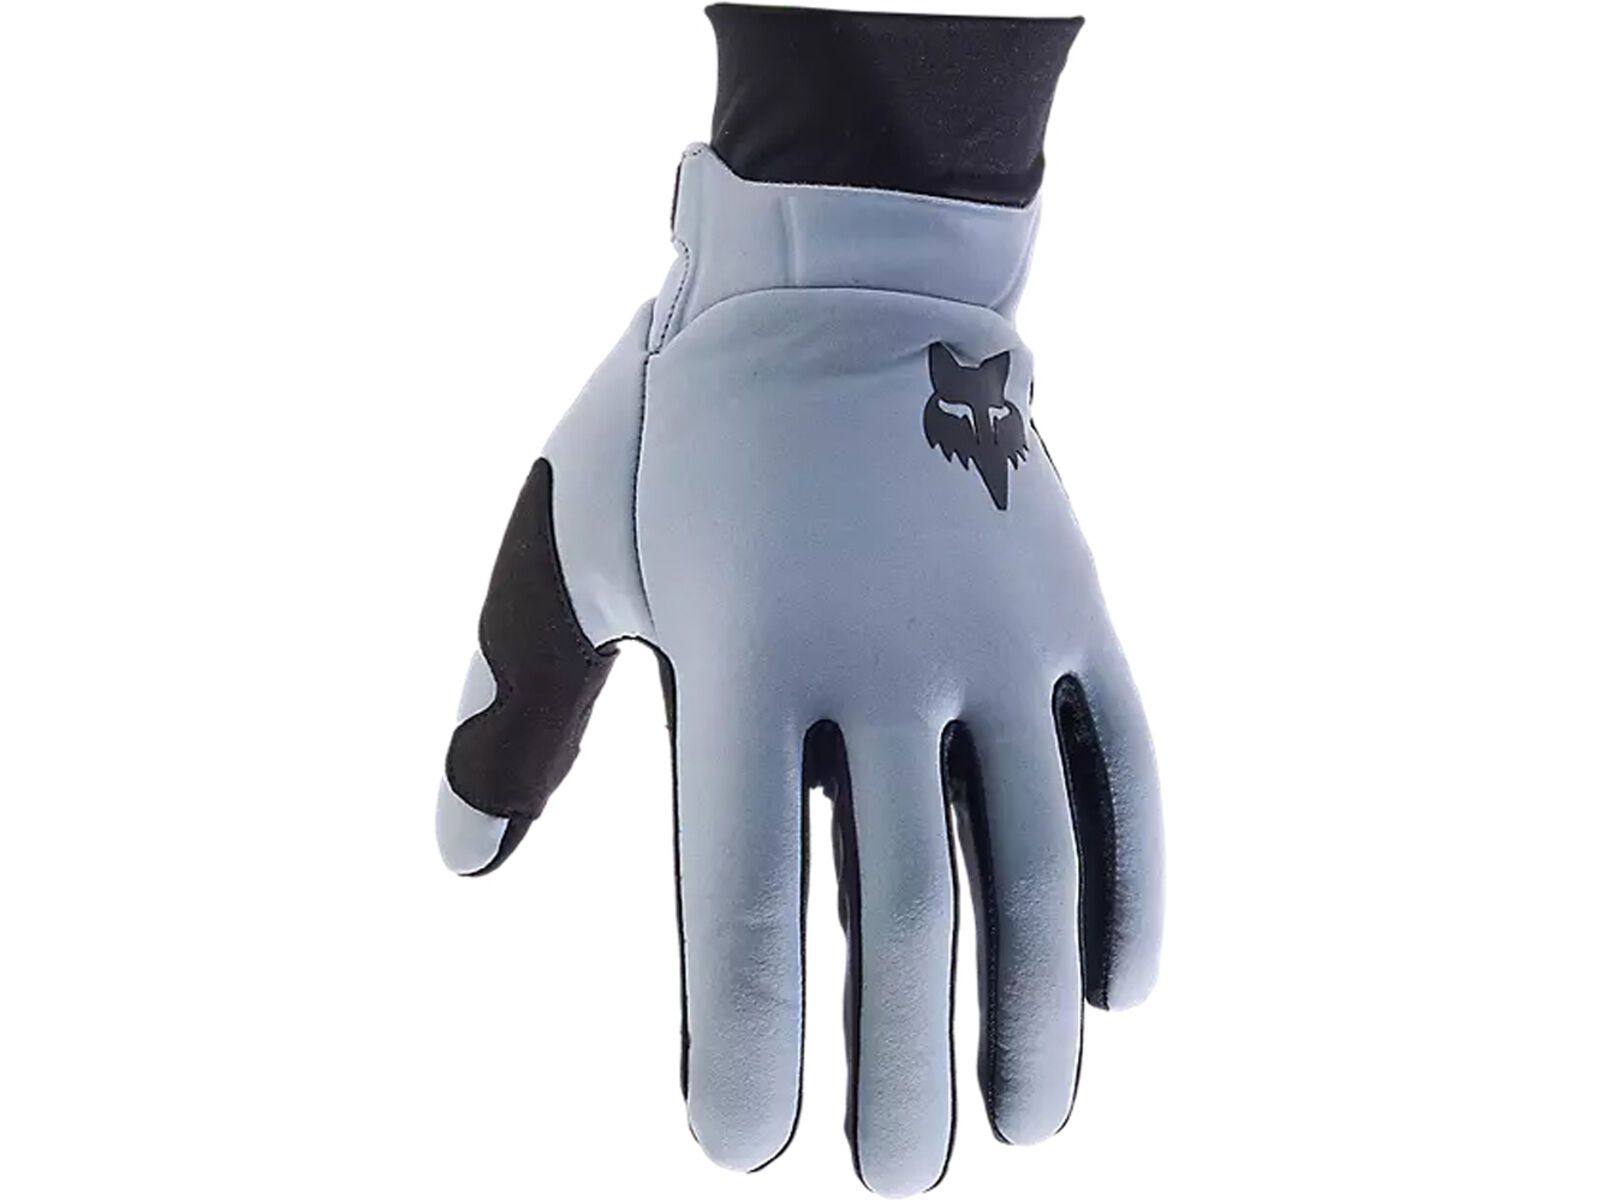 Fox Defend Thermo Glove, steel grey | Bild 1